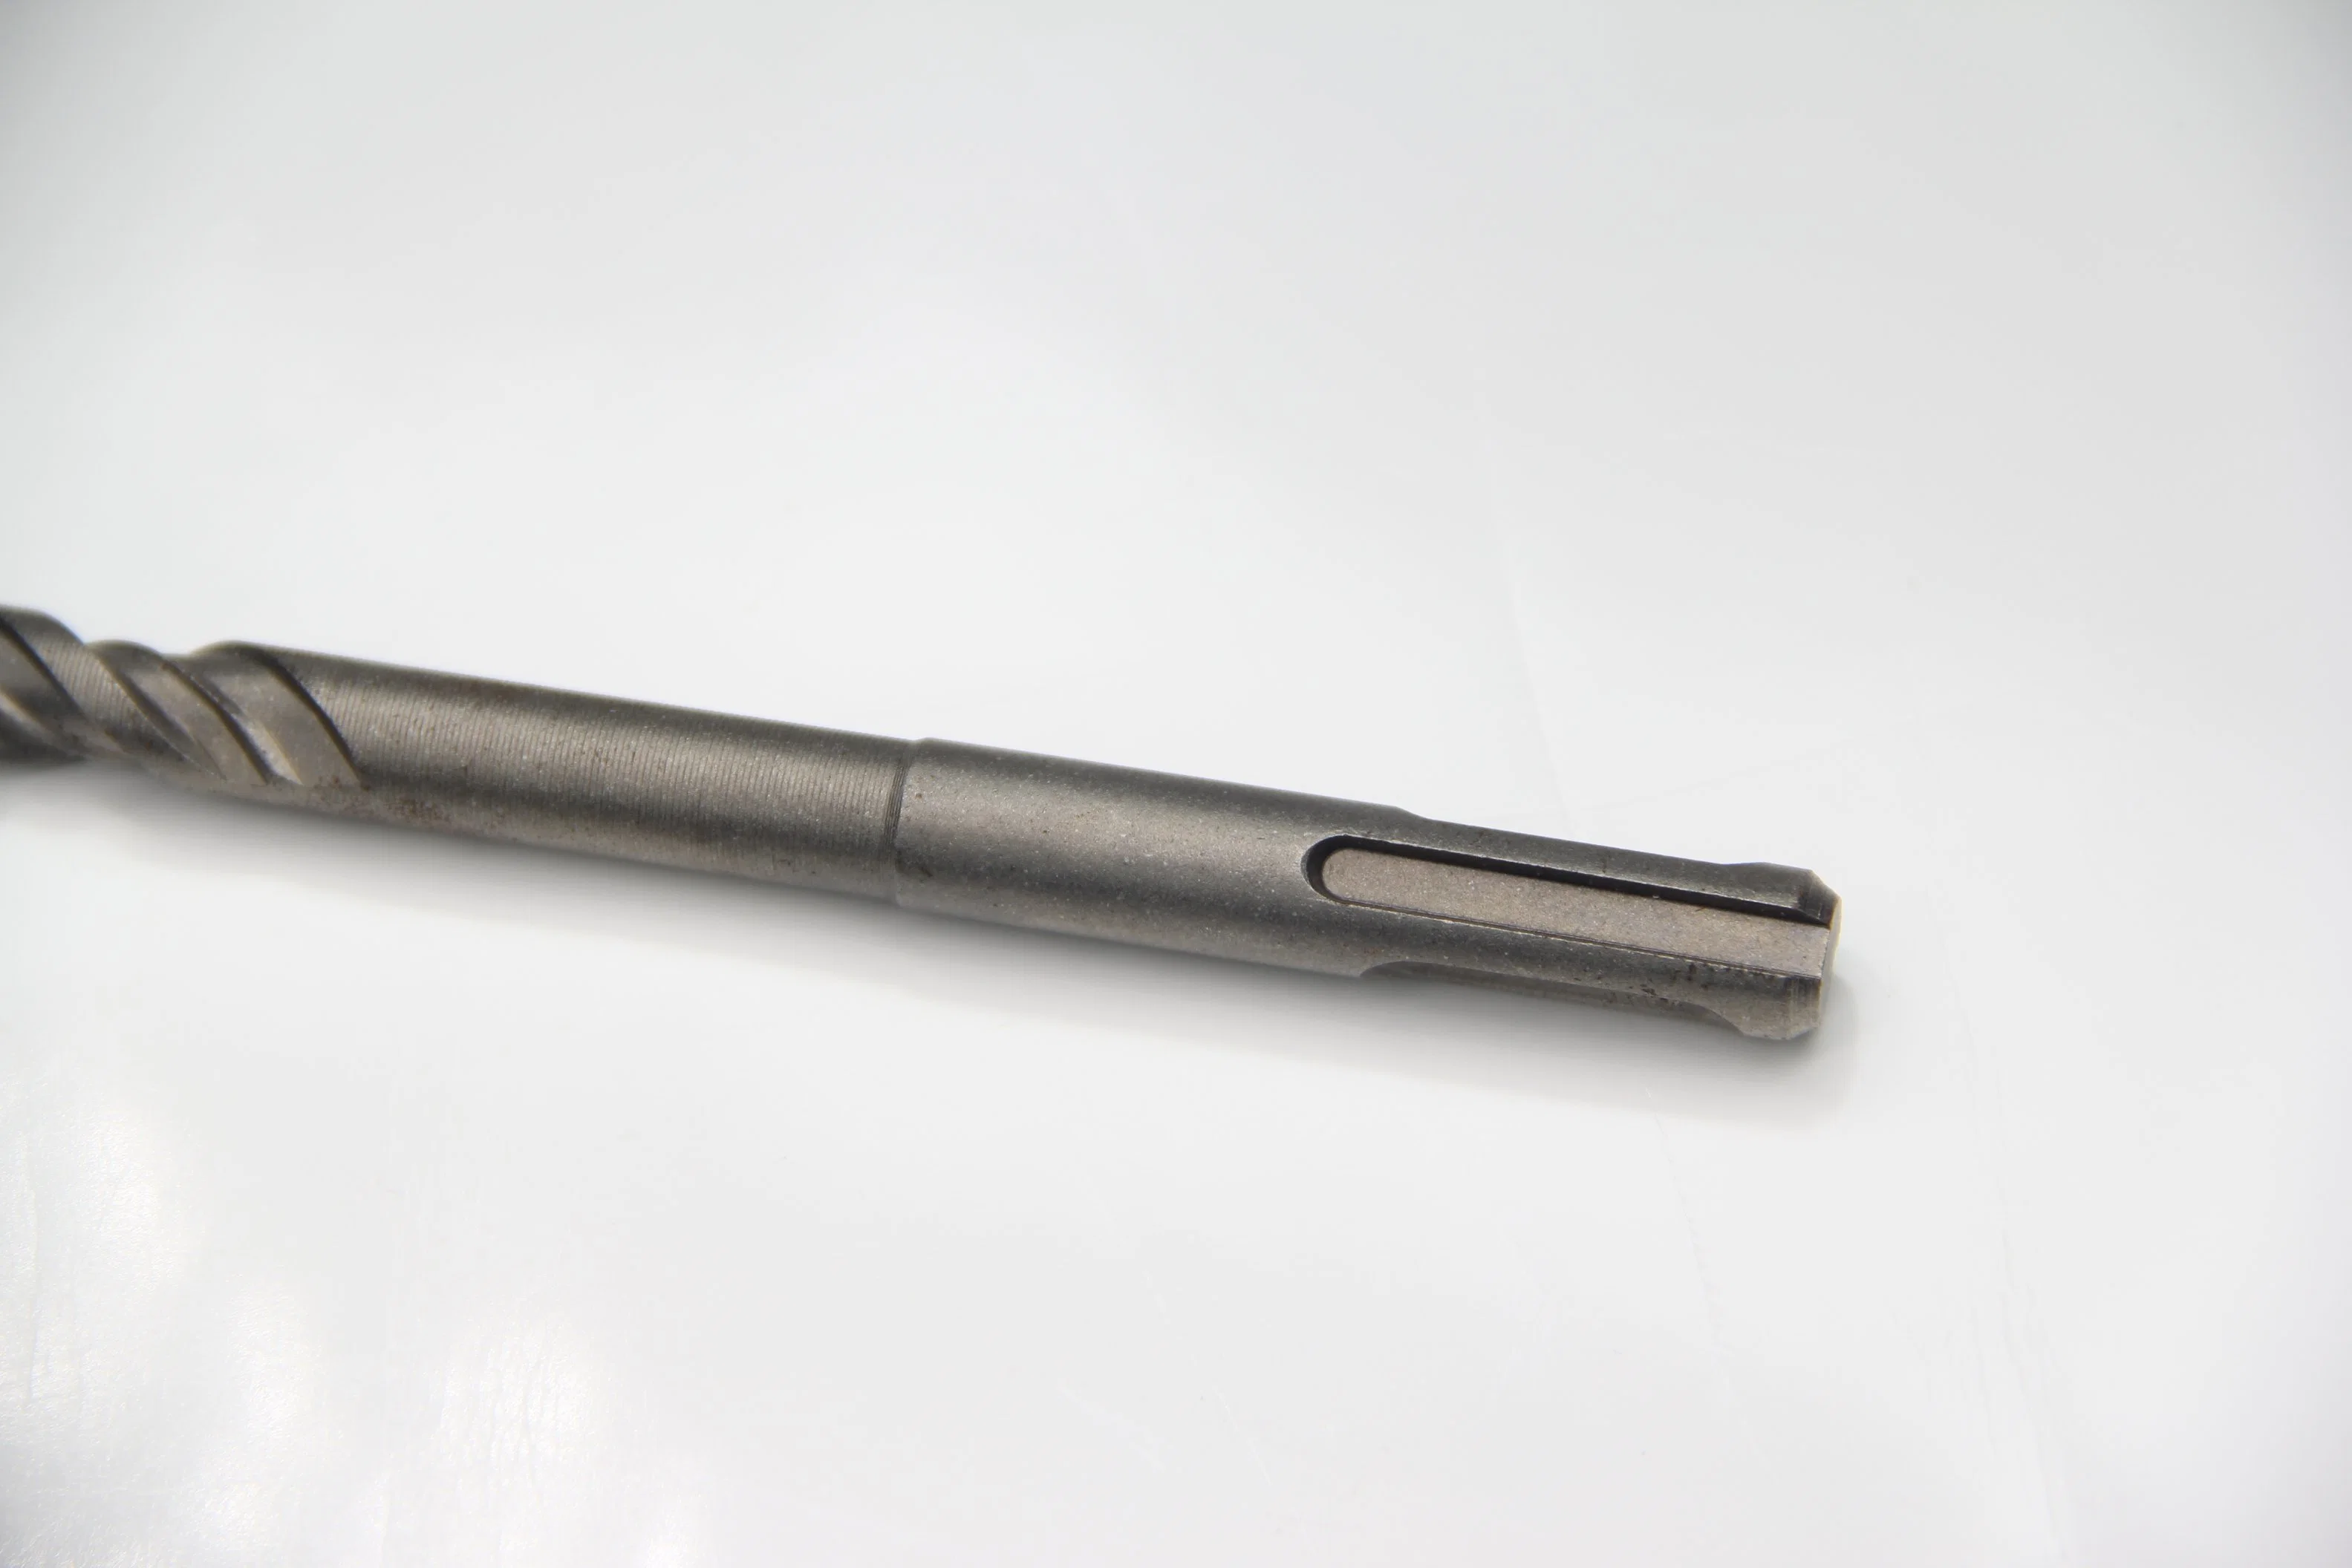 Taladro martillo martillo eléctrico, aplicable al Juego de brocas de perforación de pozos